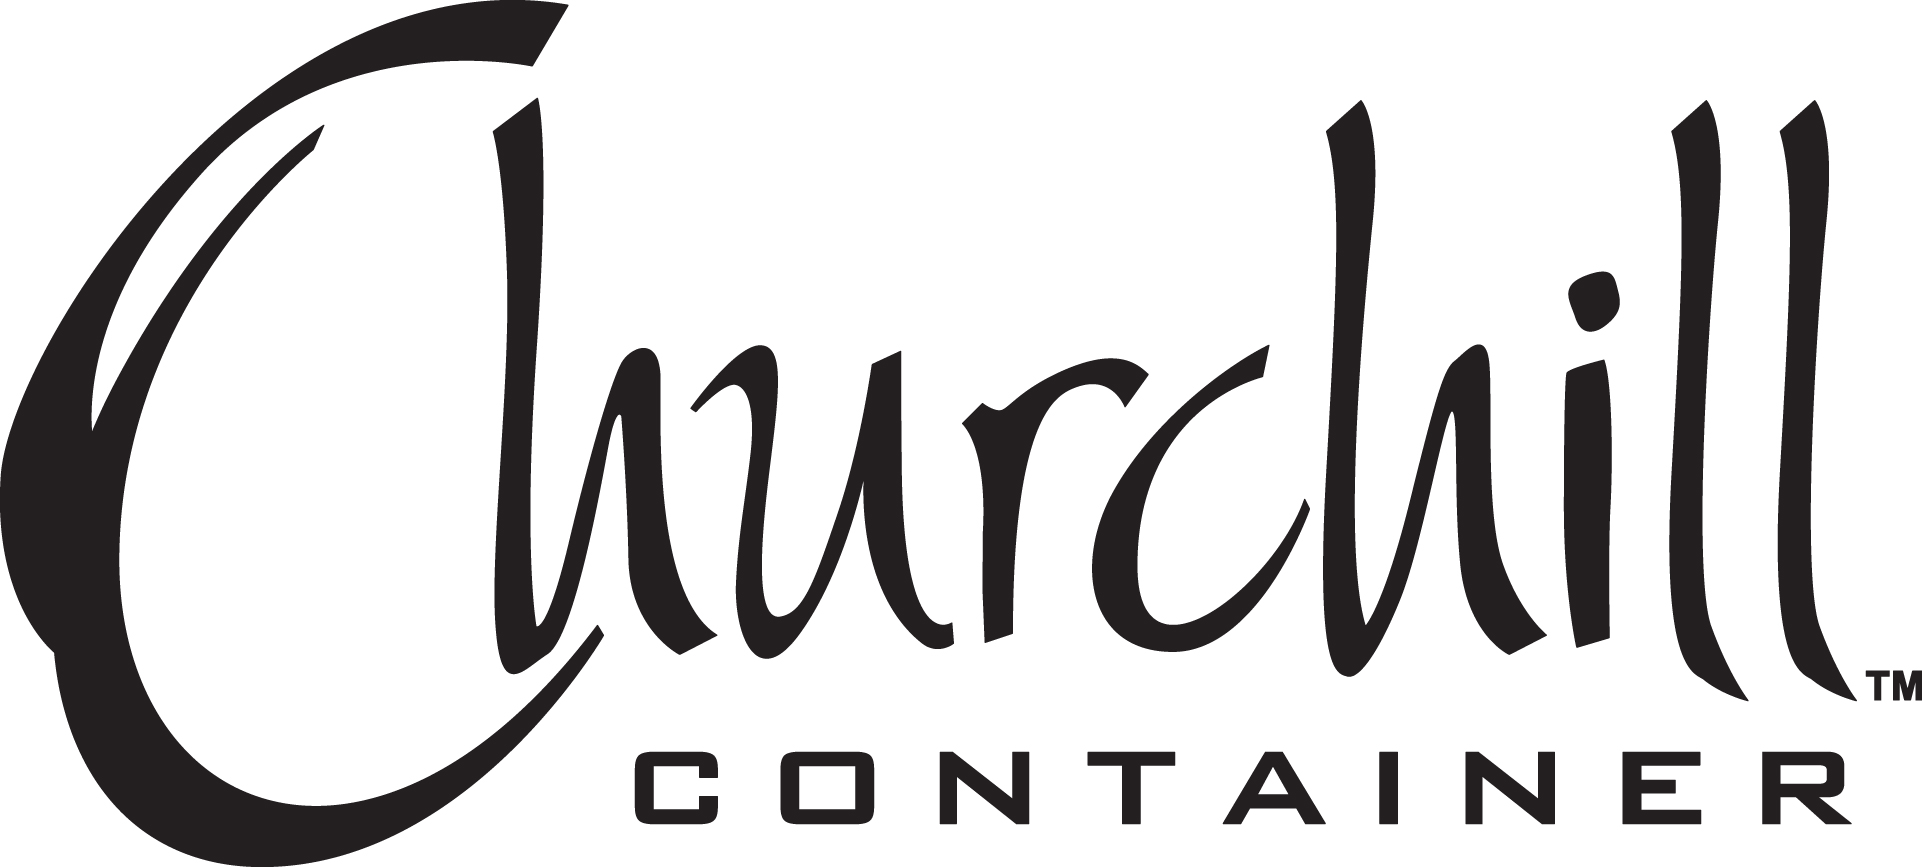 churchill-container-logo.jpg